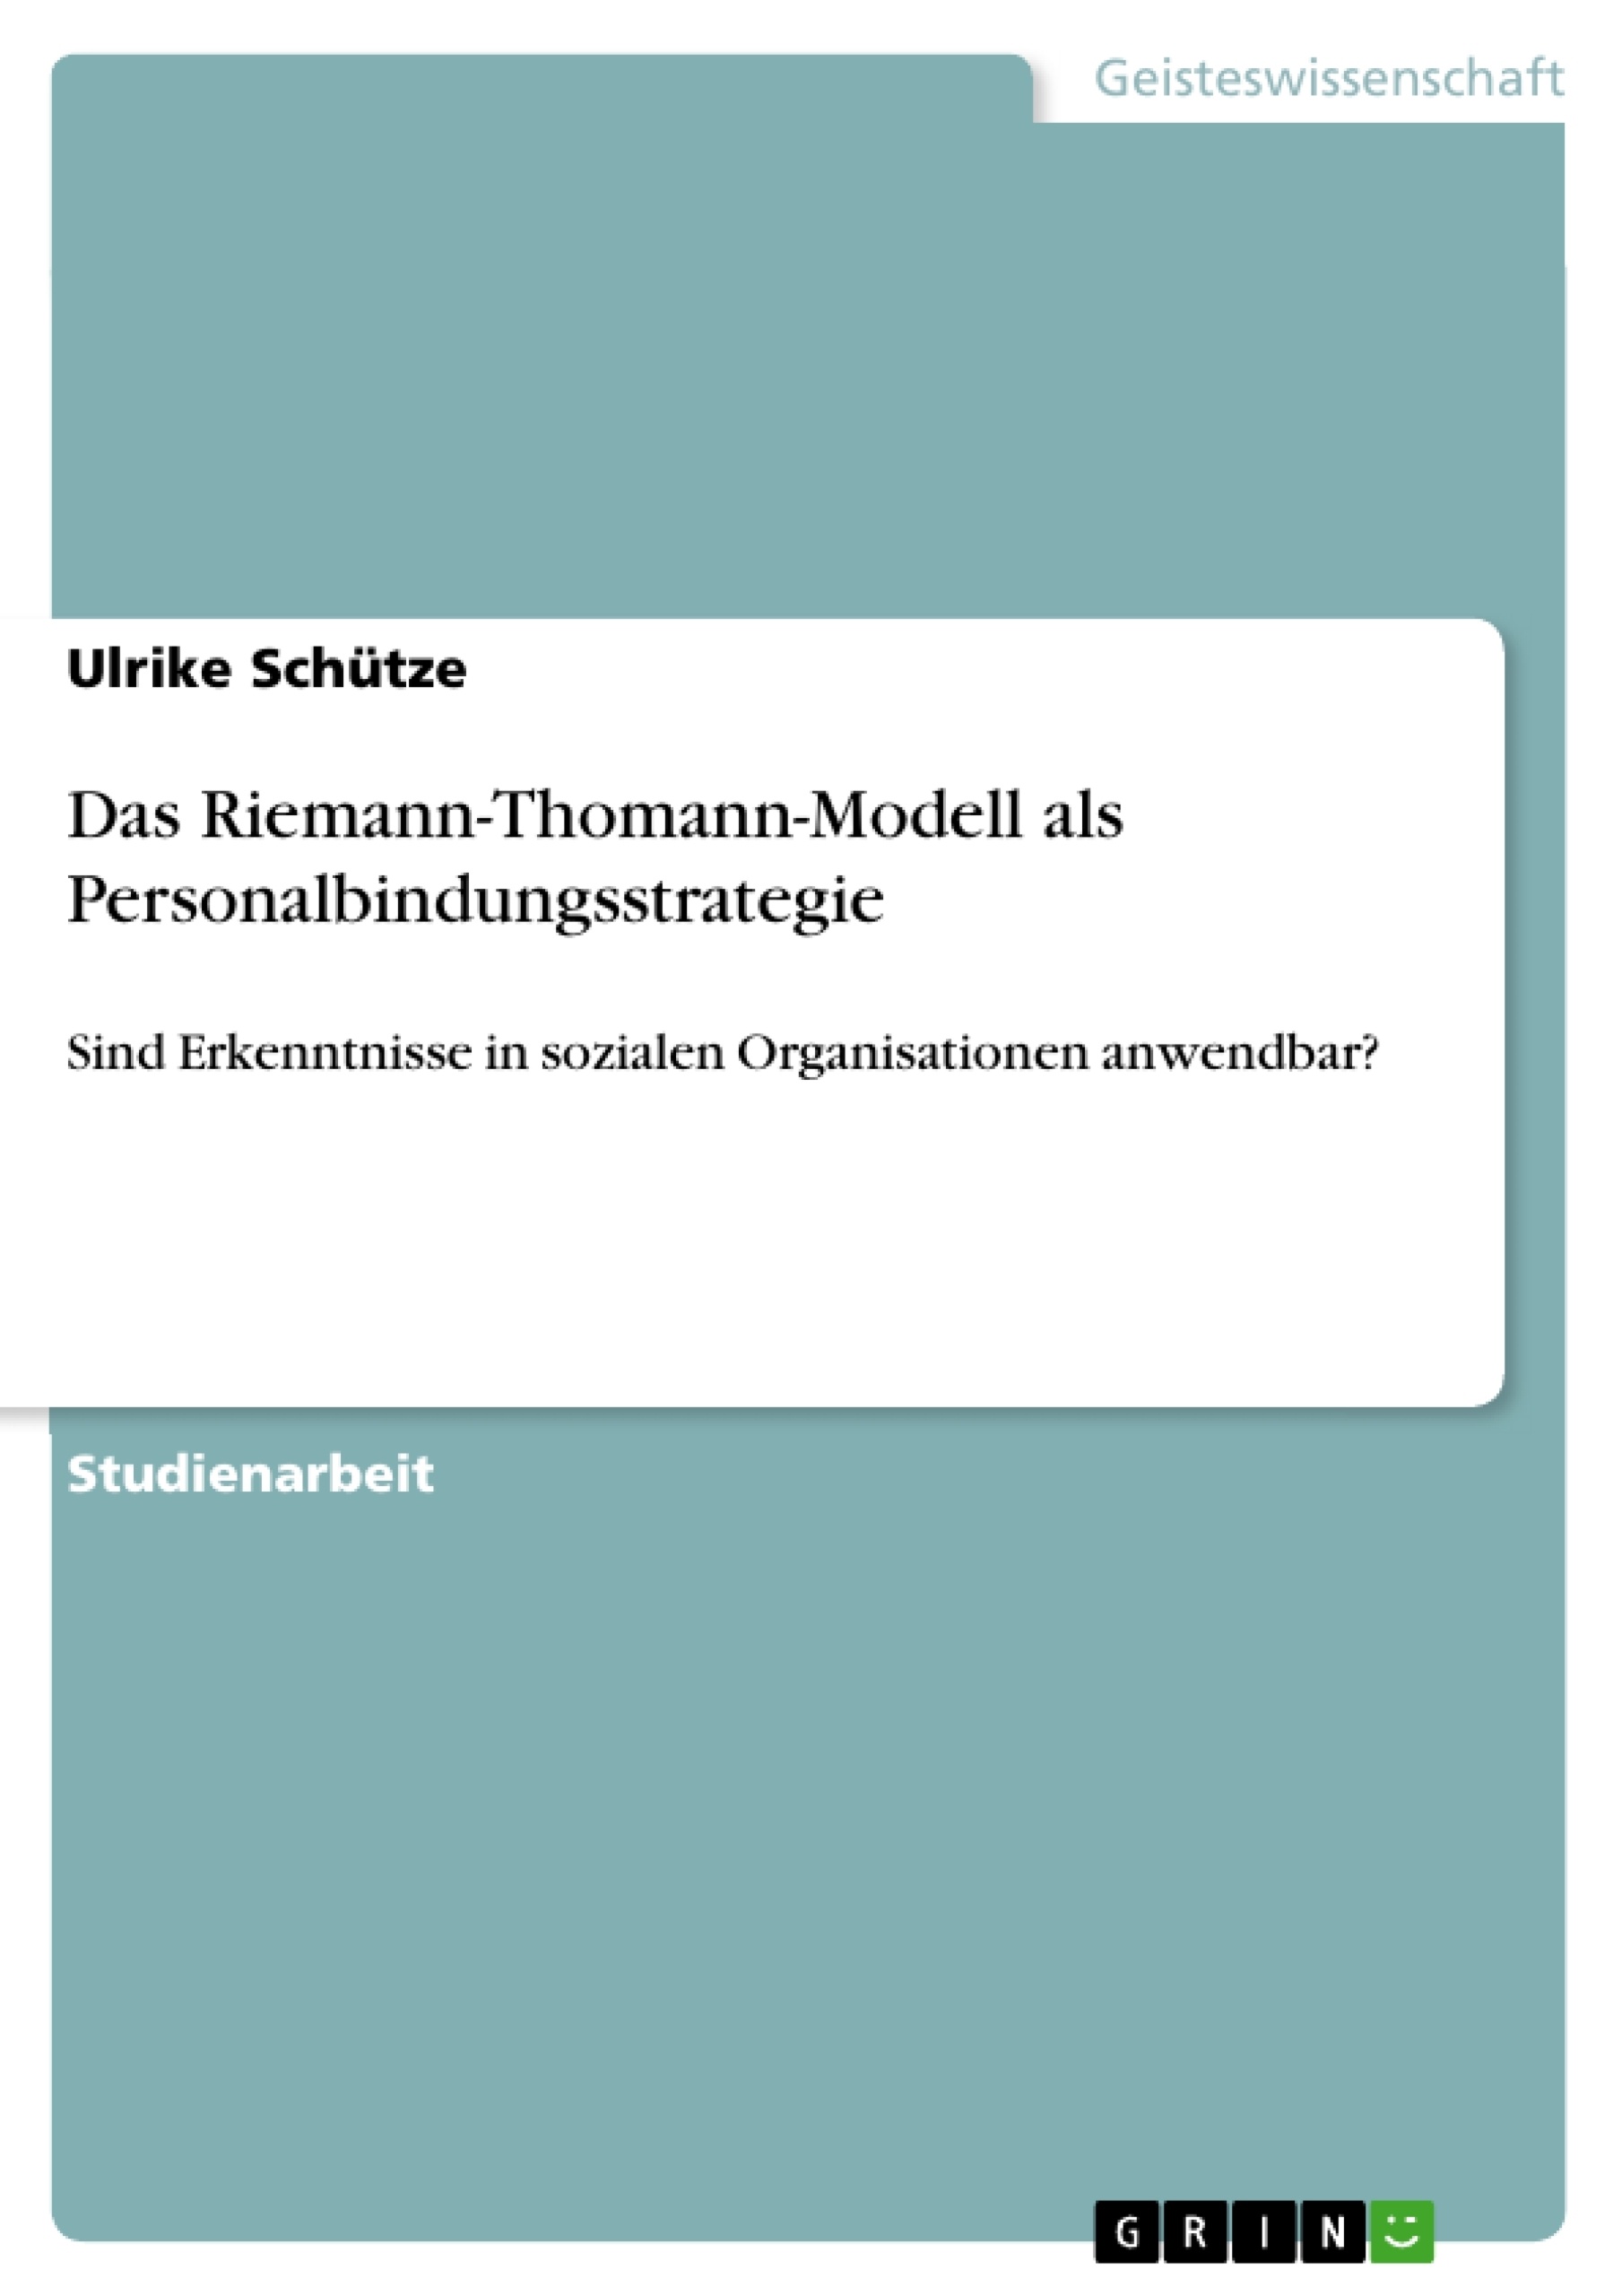 Beispiel riemann-thomann-modell ᐅ Riemann